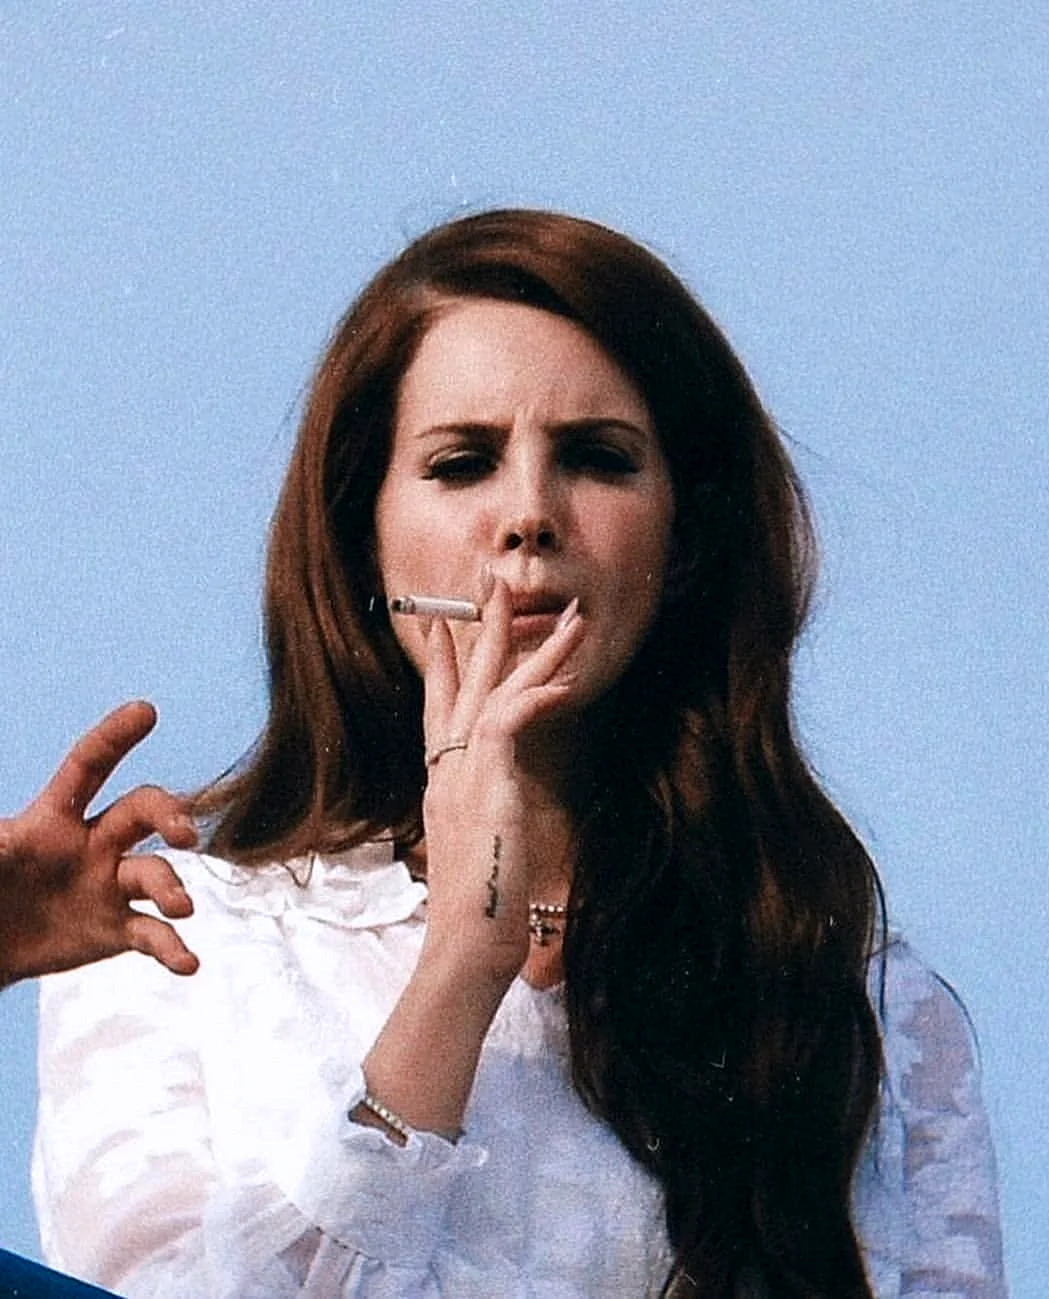 Lana Del Rey Smoking Wallpaper For iPhone